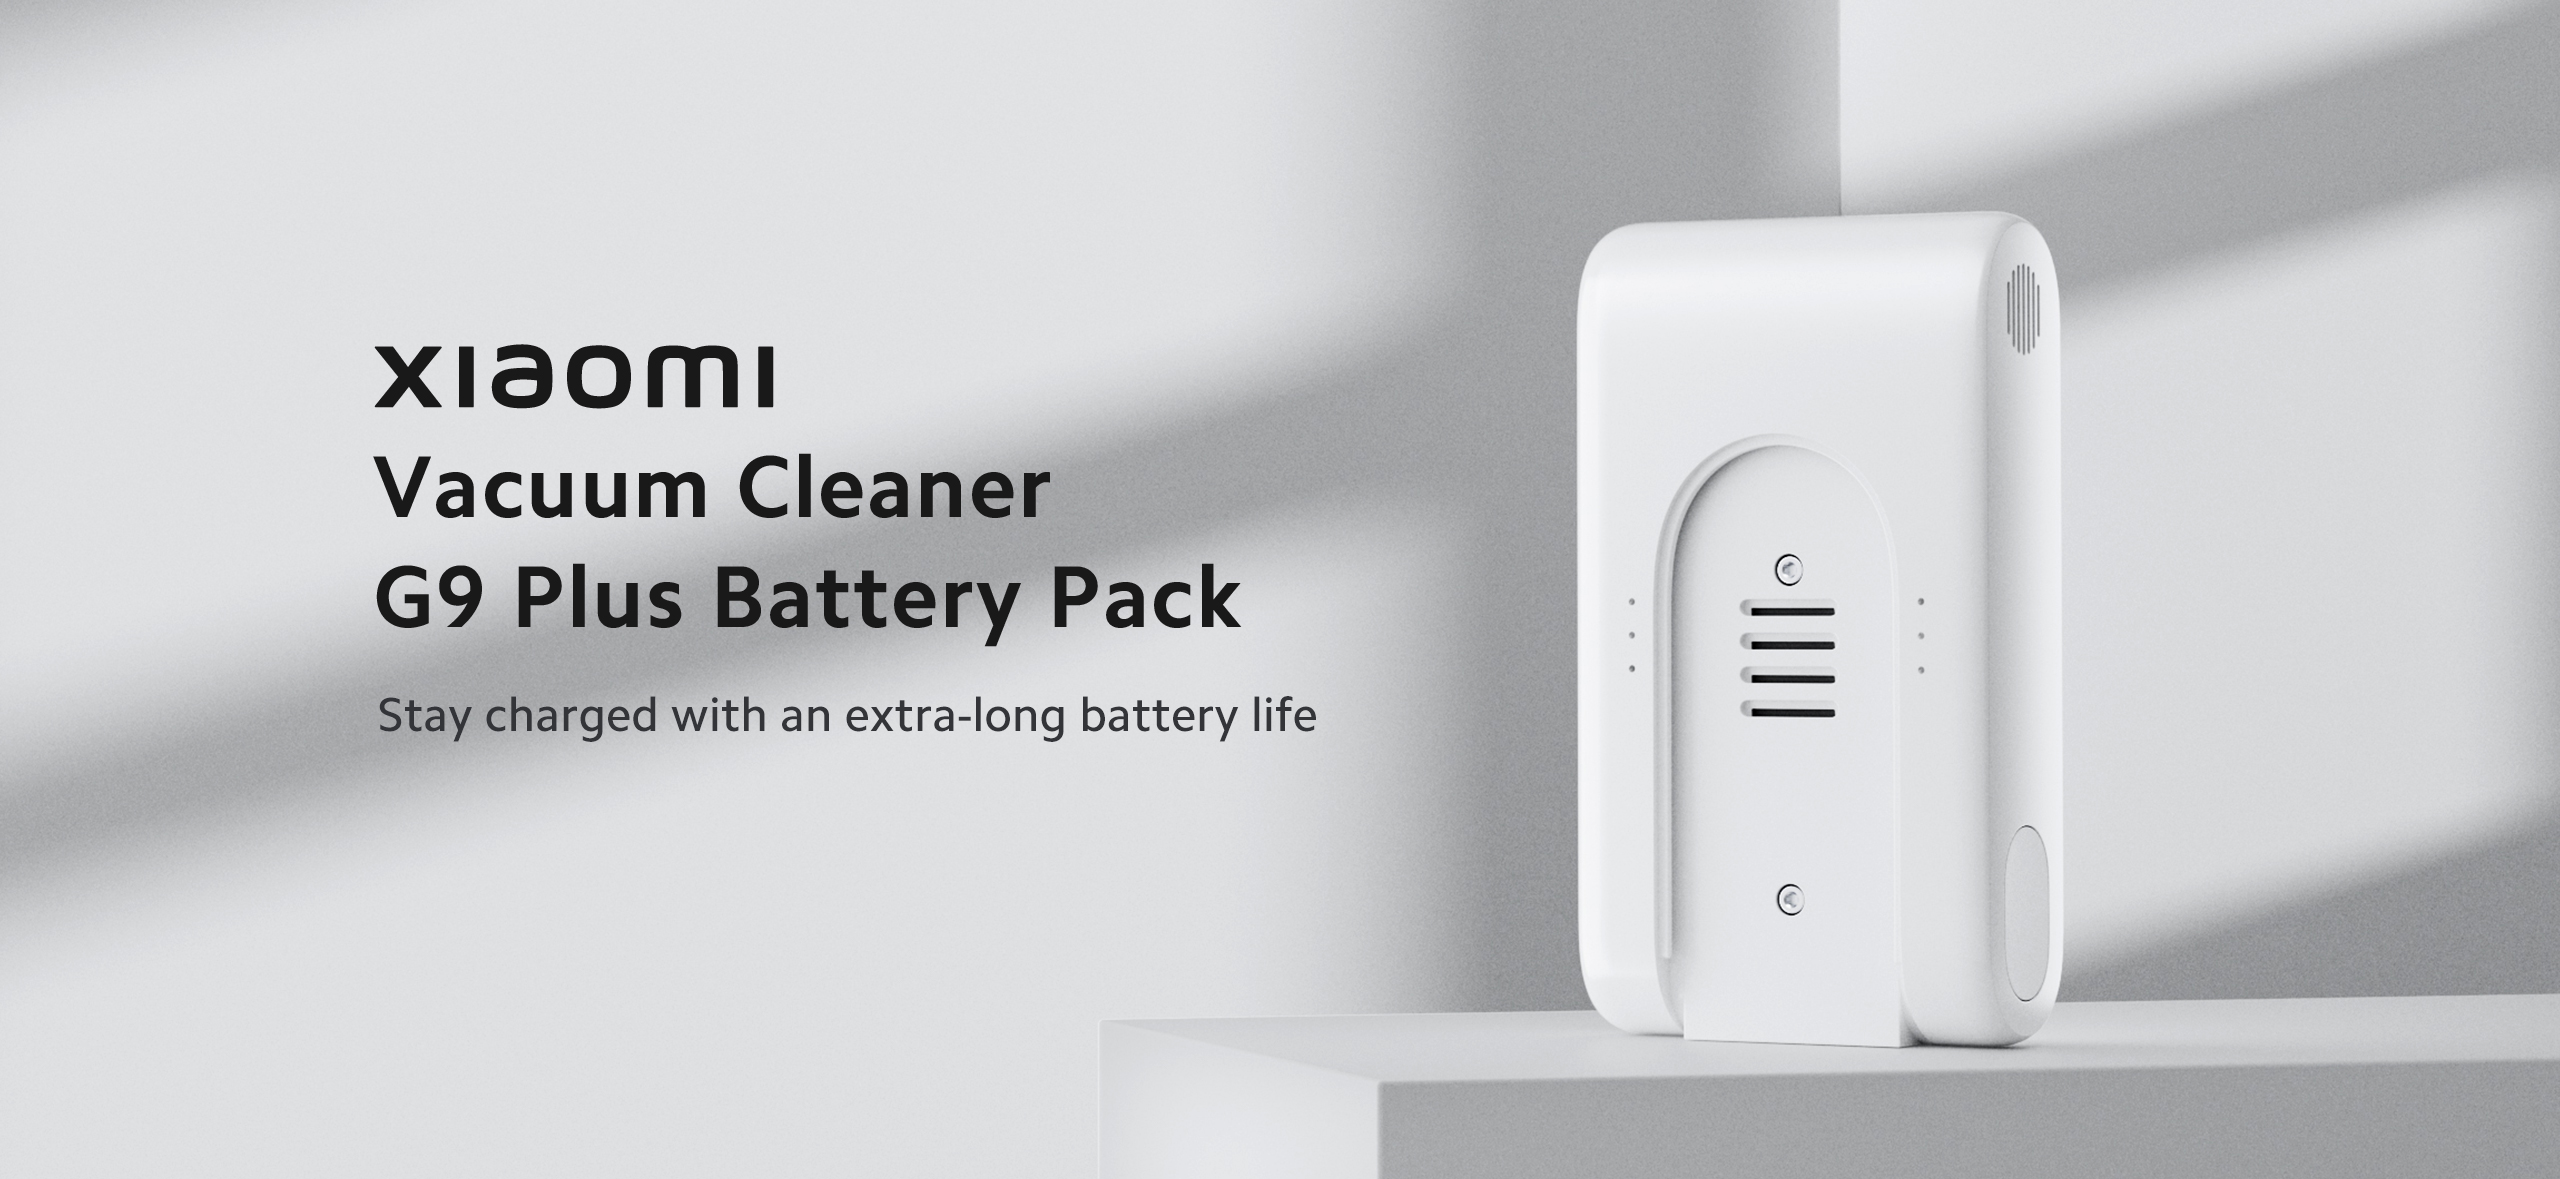 Xiaomi Vacuum Cleaner G9 Plus Battery Pack